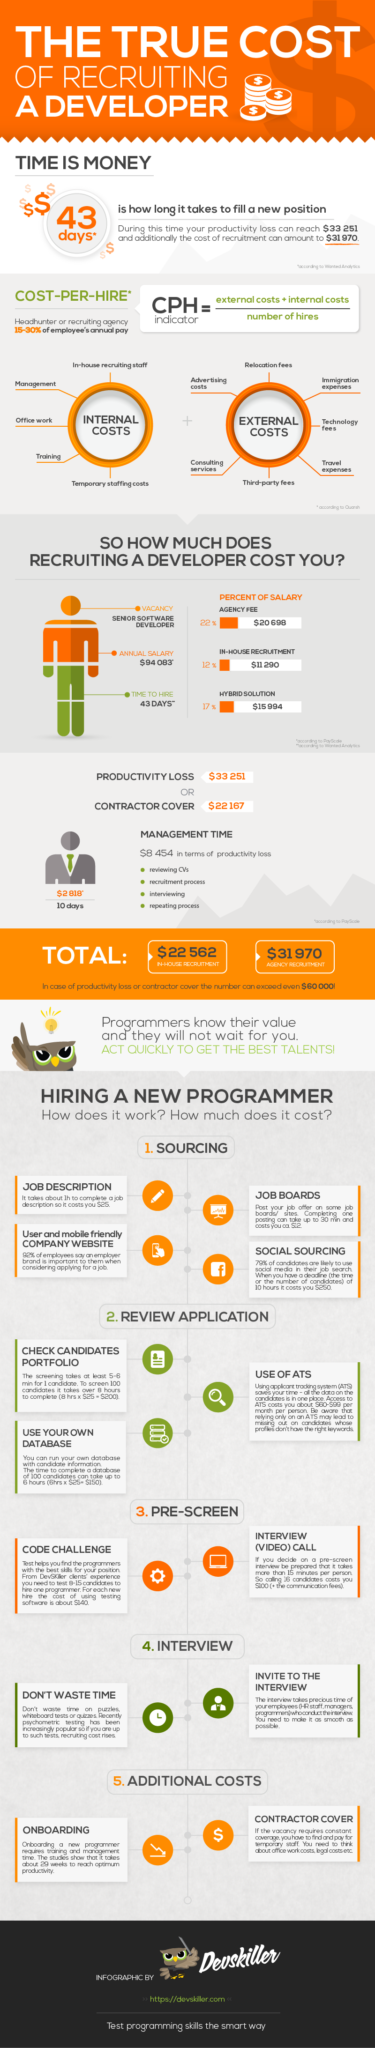 devskiller-true-cost-of-recruiting-a-developer-infographic